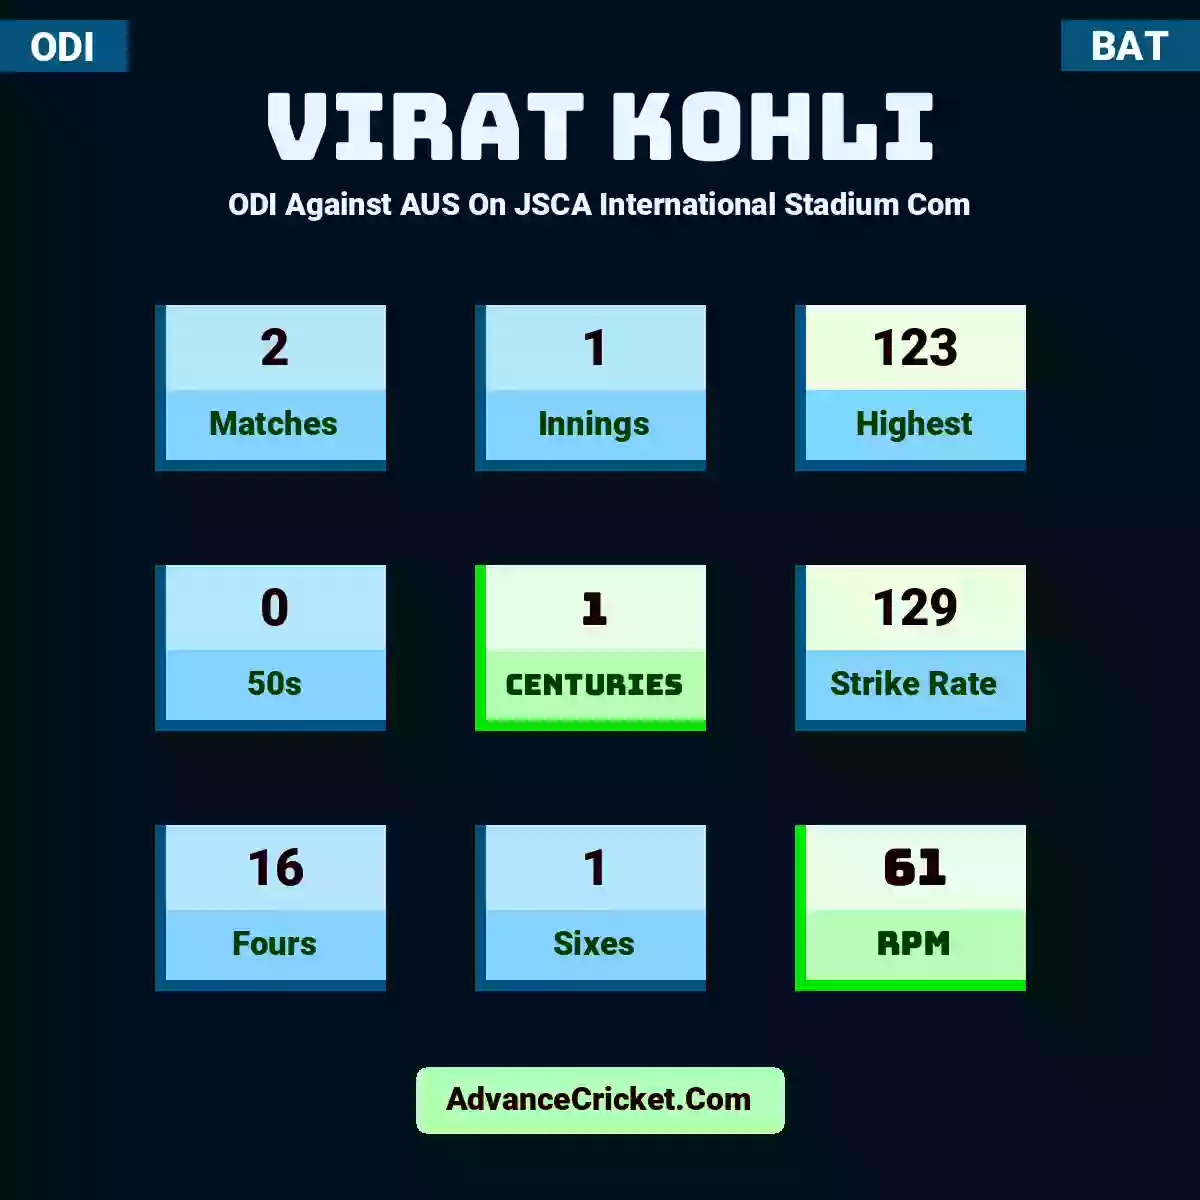 Virat Kohli ODI  Against AUS On JSCA International Stadium Com, Virat Kohli played 2 matches, scored 123 runs as highest, 0 half-centuries, and 1 centuries, with a strike rate of 129. V.Kohli hit 16 fours and 1 sixes, with an RPM of 61.